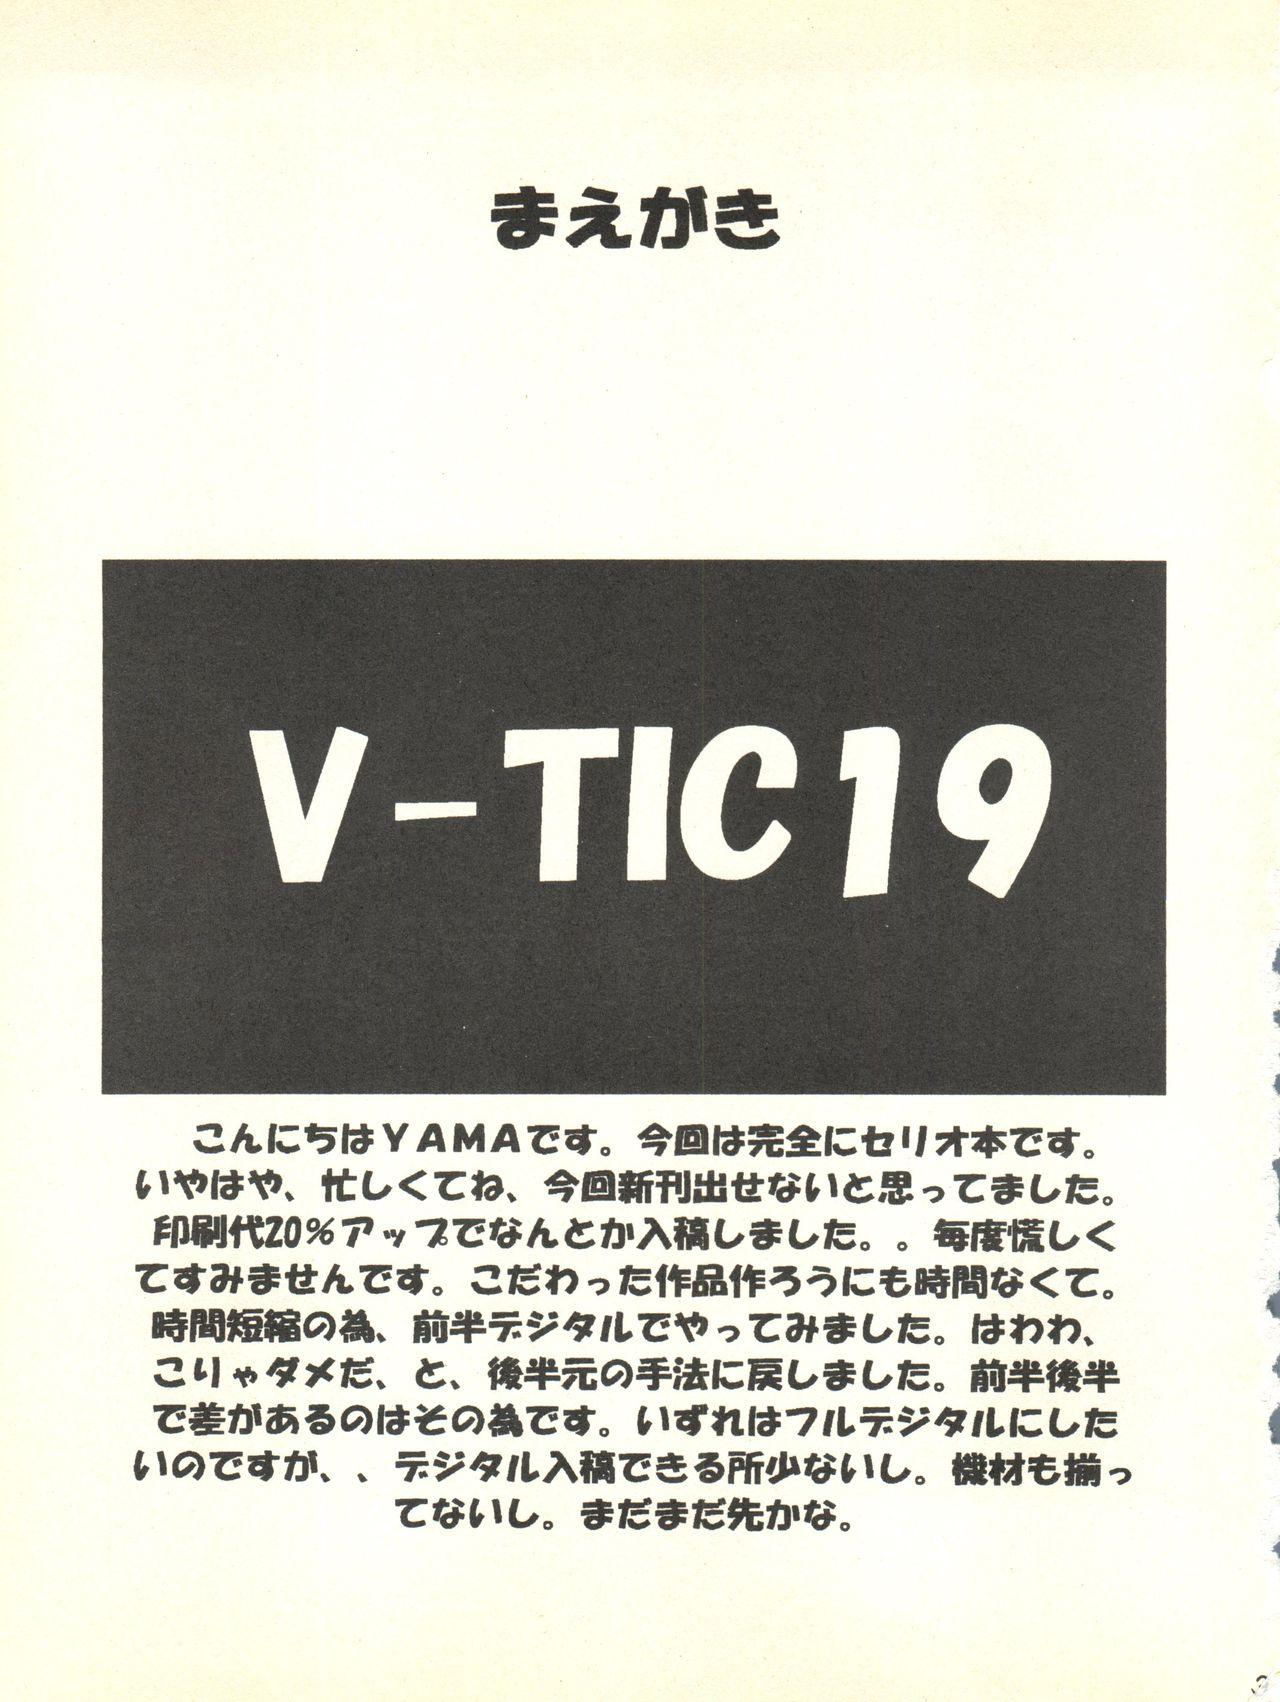 V-TIC 19 2